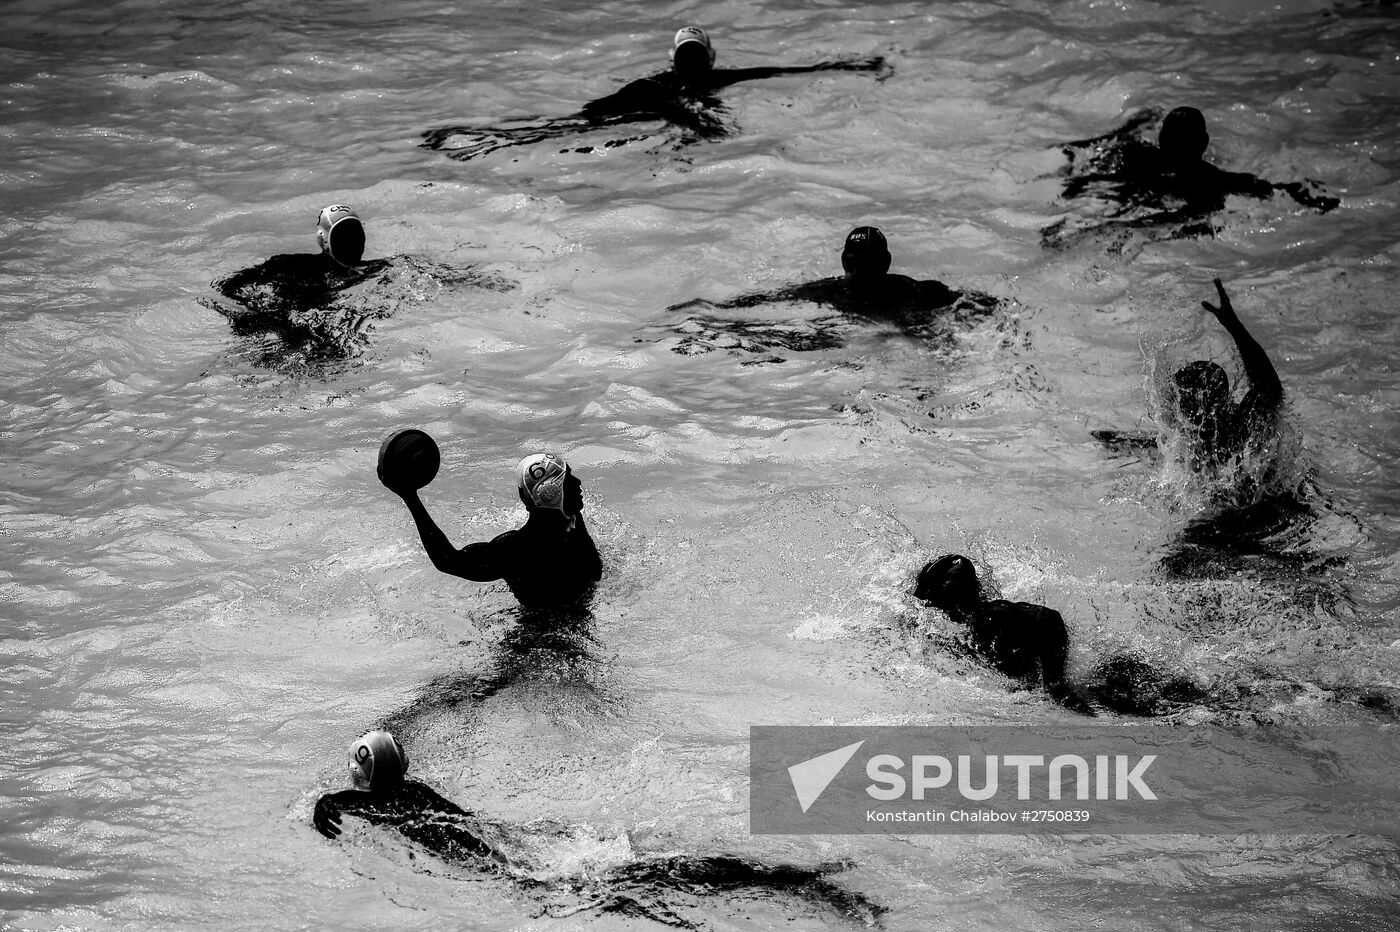 FINA 2015 World Championships Men's Water Polo. China vs. Russia